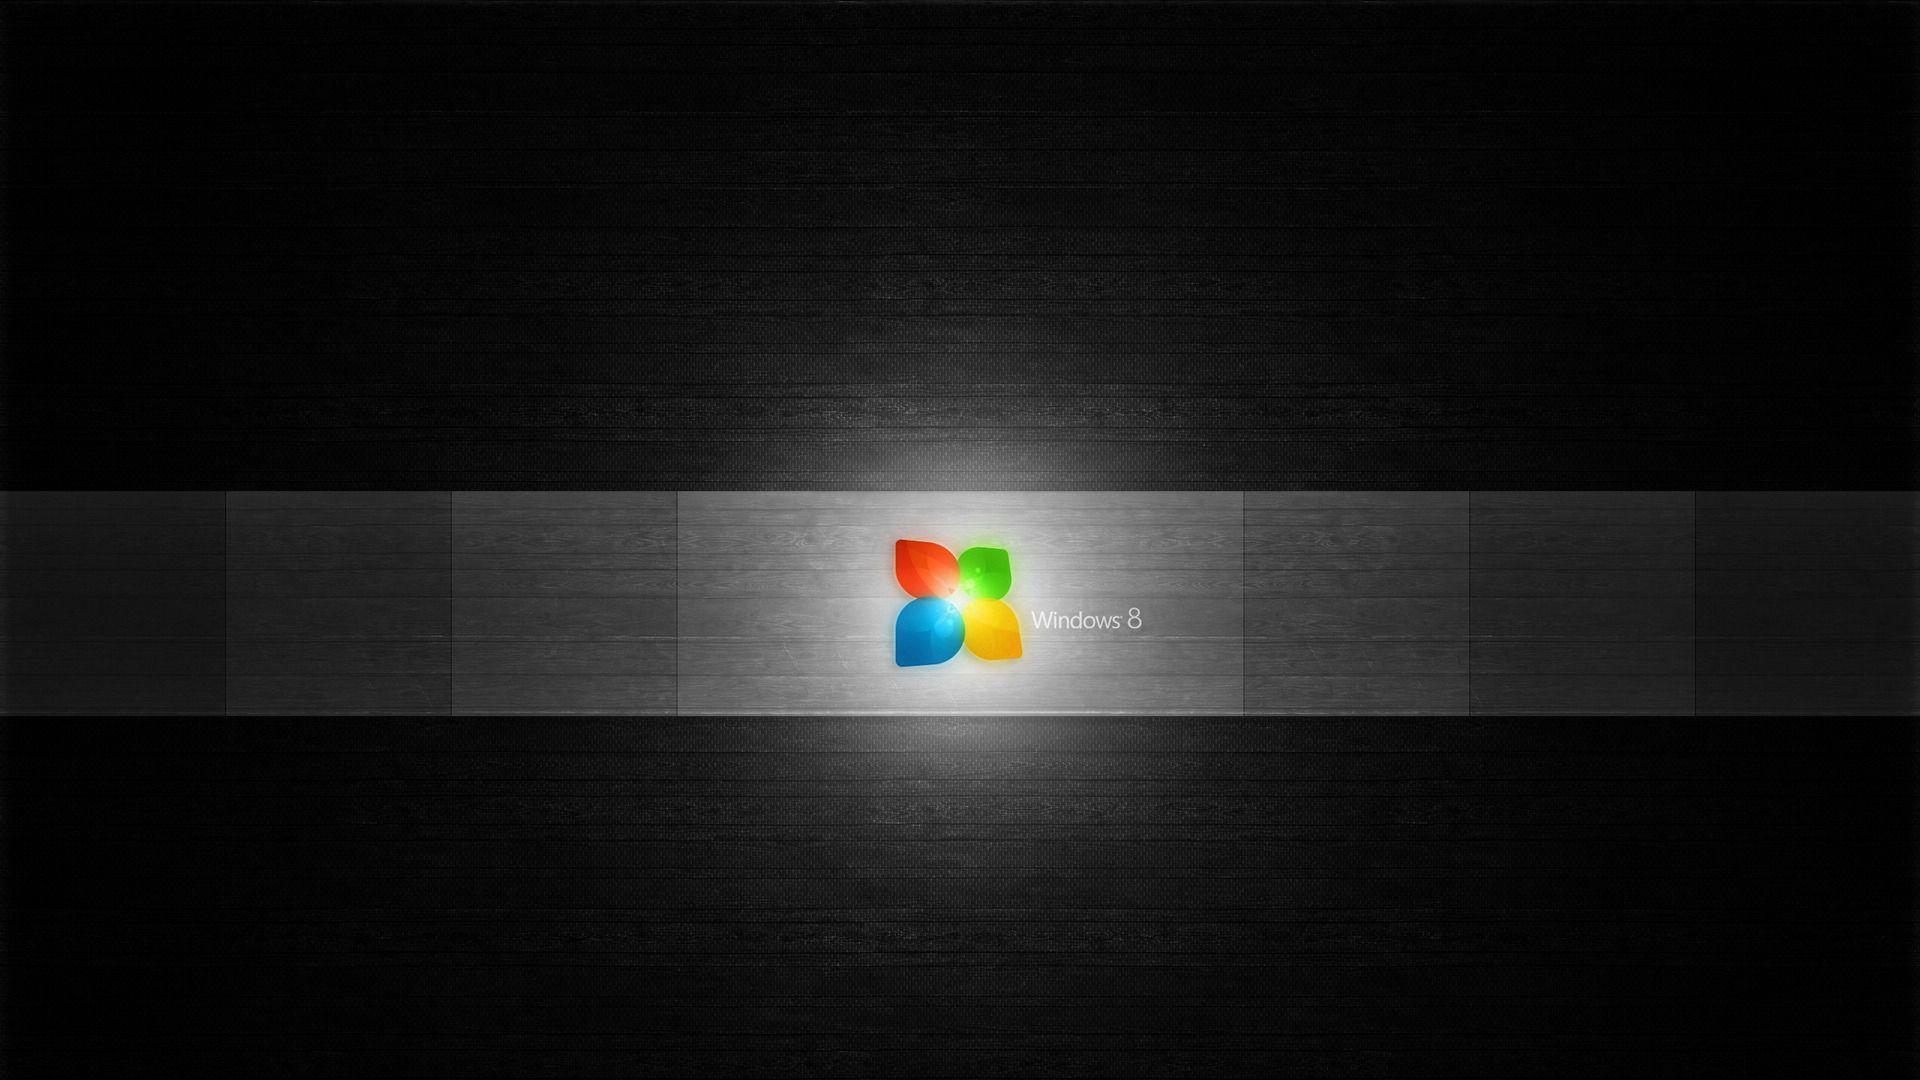 Wallpaper For > Windows 8 Wallpaper 1920x1080 Black